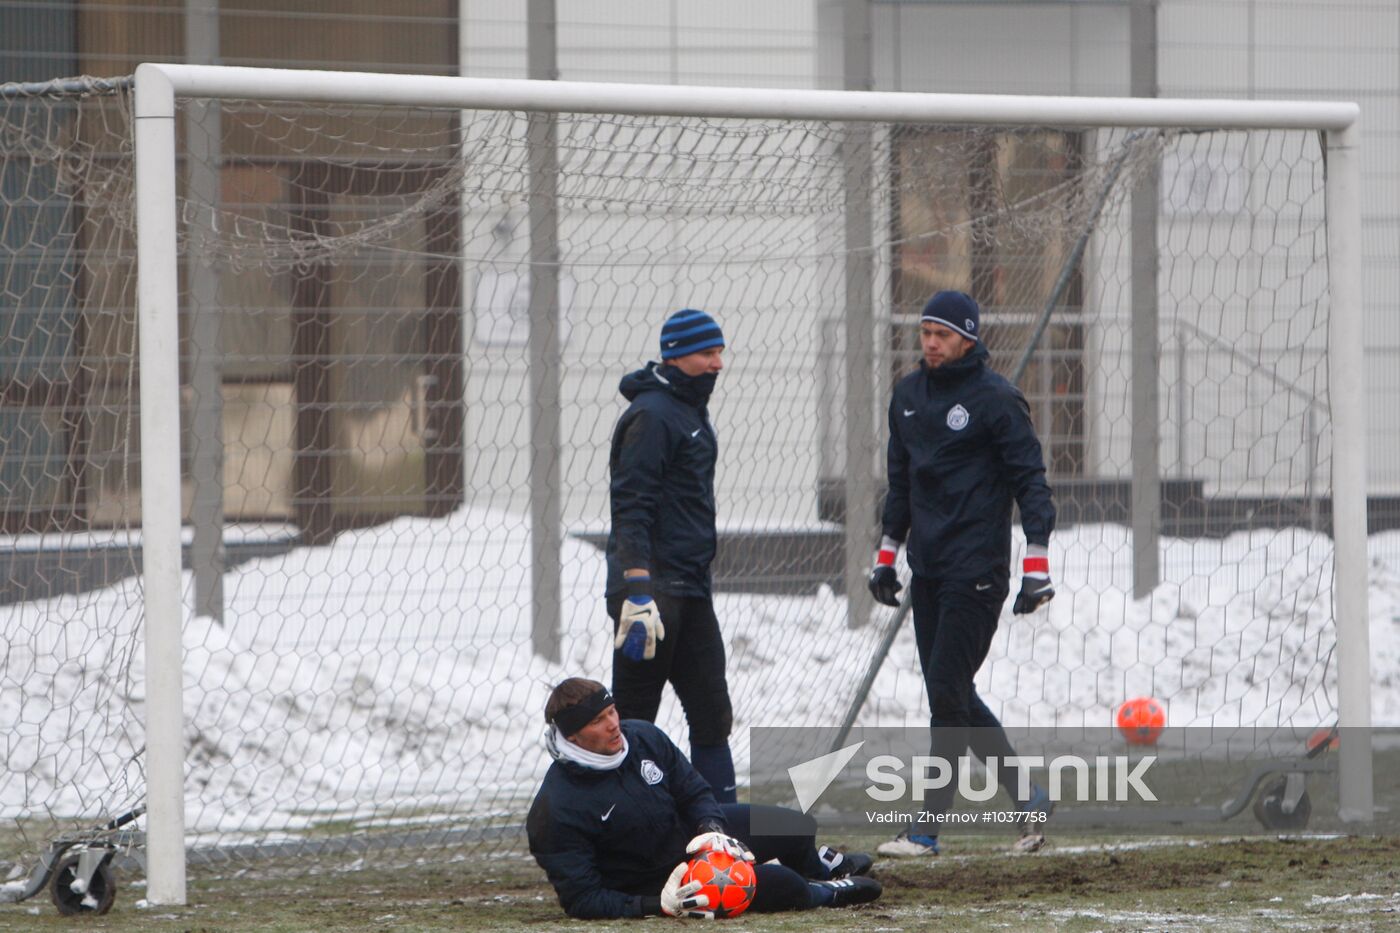 Zenit training session. Champions League. Football